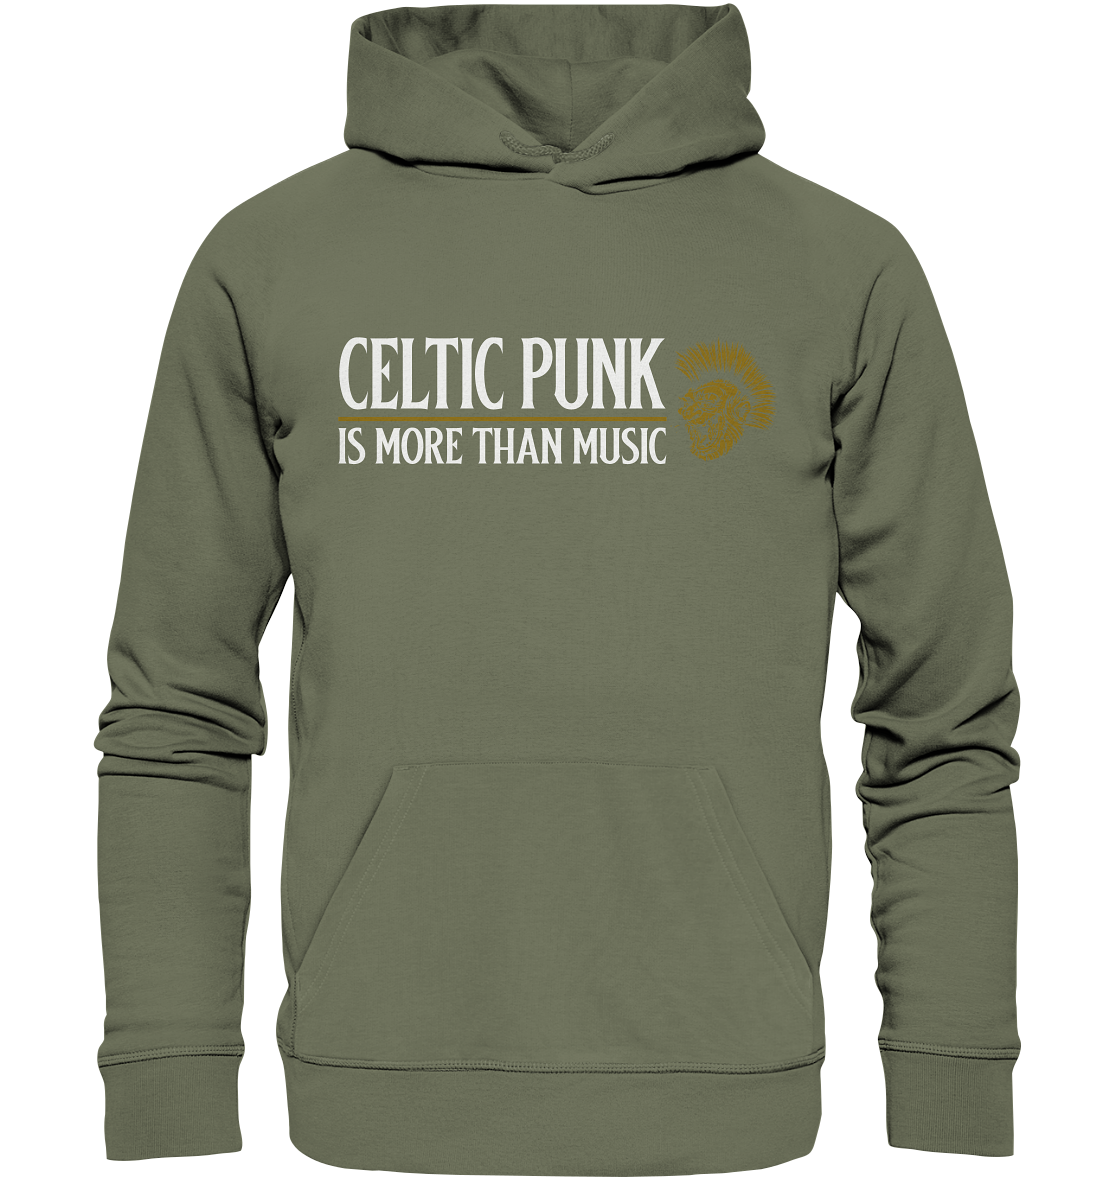 Celtic Punk "Is More Than Music" - Premium Unisex Hoodie